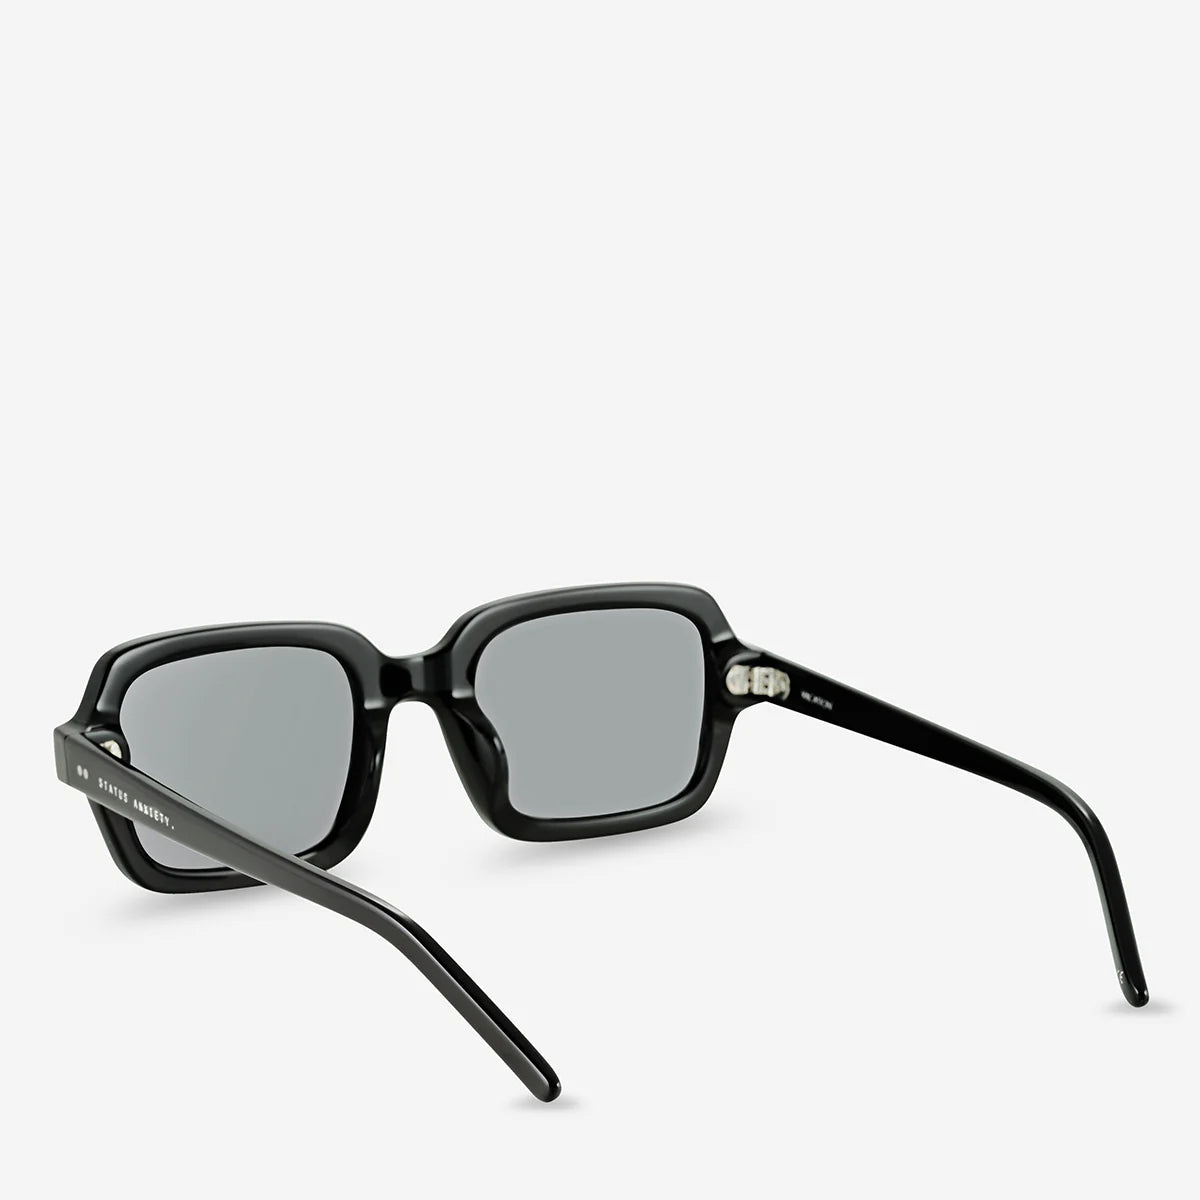 STATUS ANXIETY - Sunglasses Vacation - Black